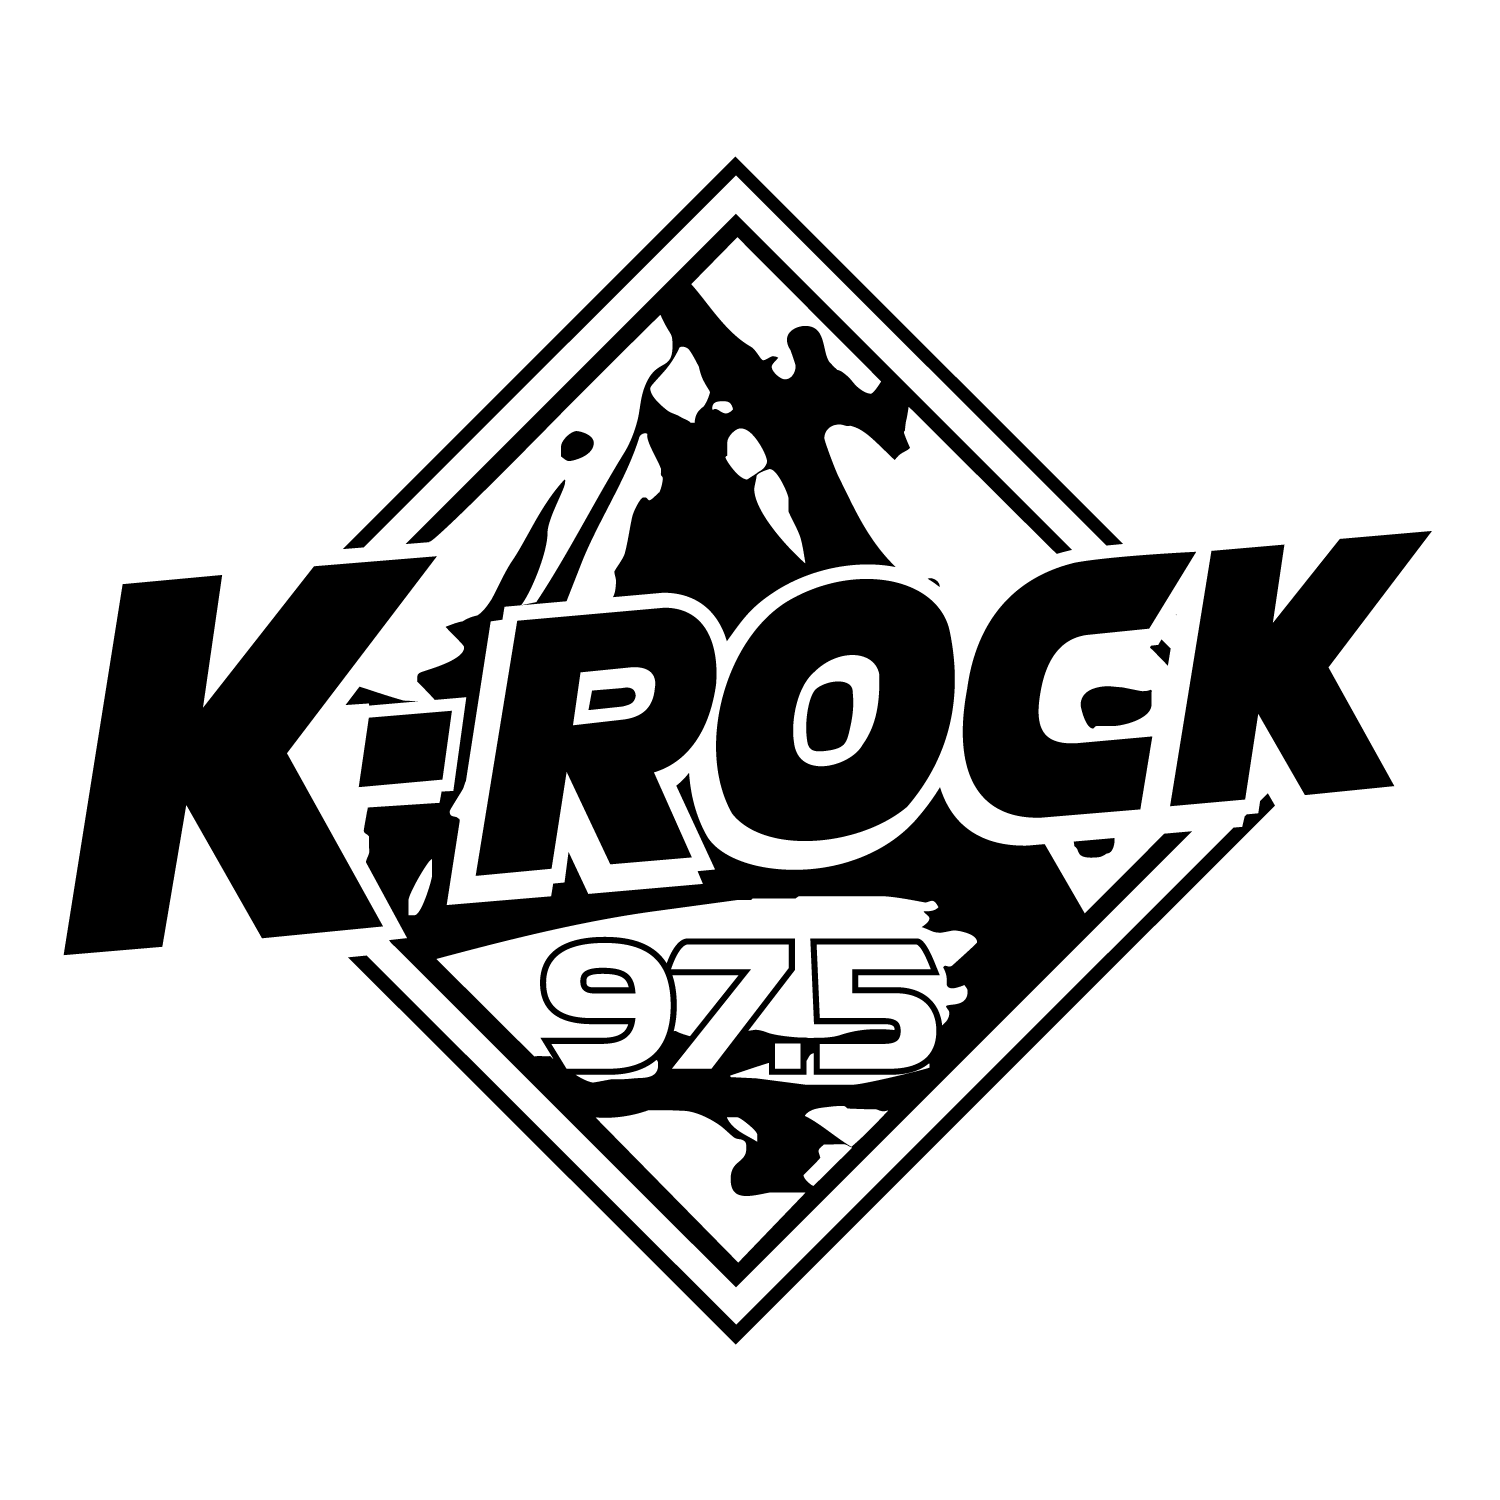 K-Rock Logo - 97.5 K ROCK Logos. K Rock 975